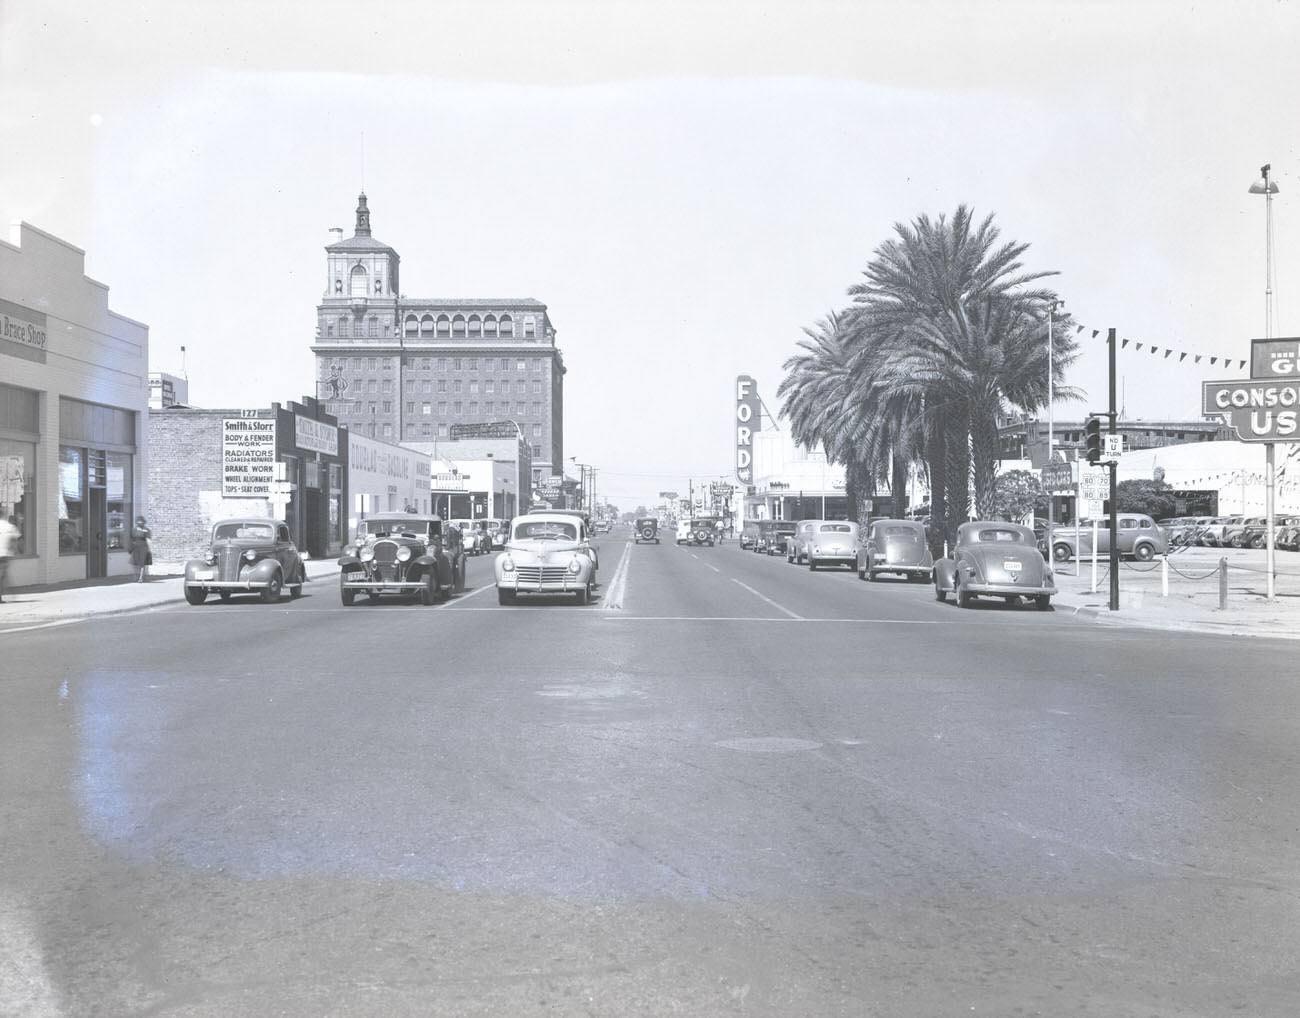 Intersection of W. Van Buren St. and 1st Ave, 1942